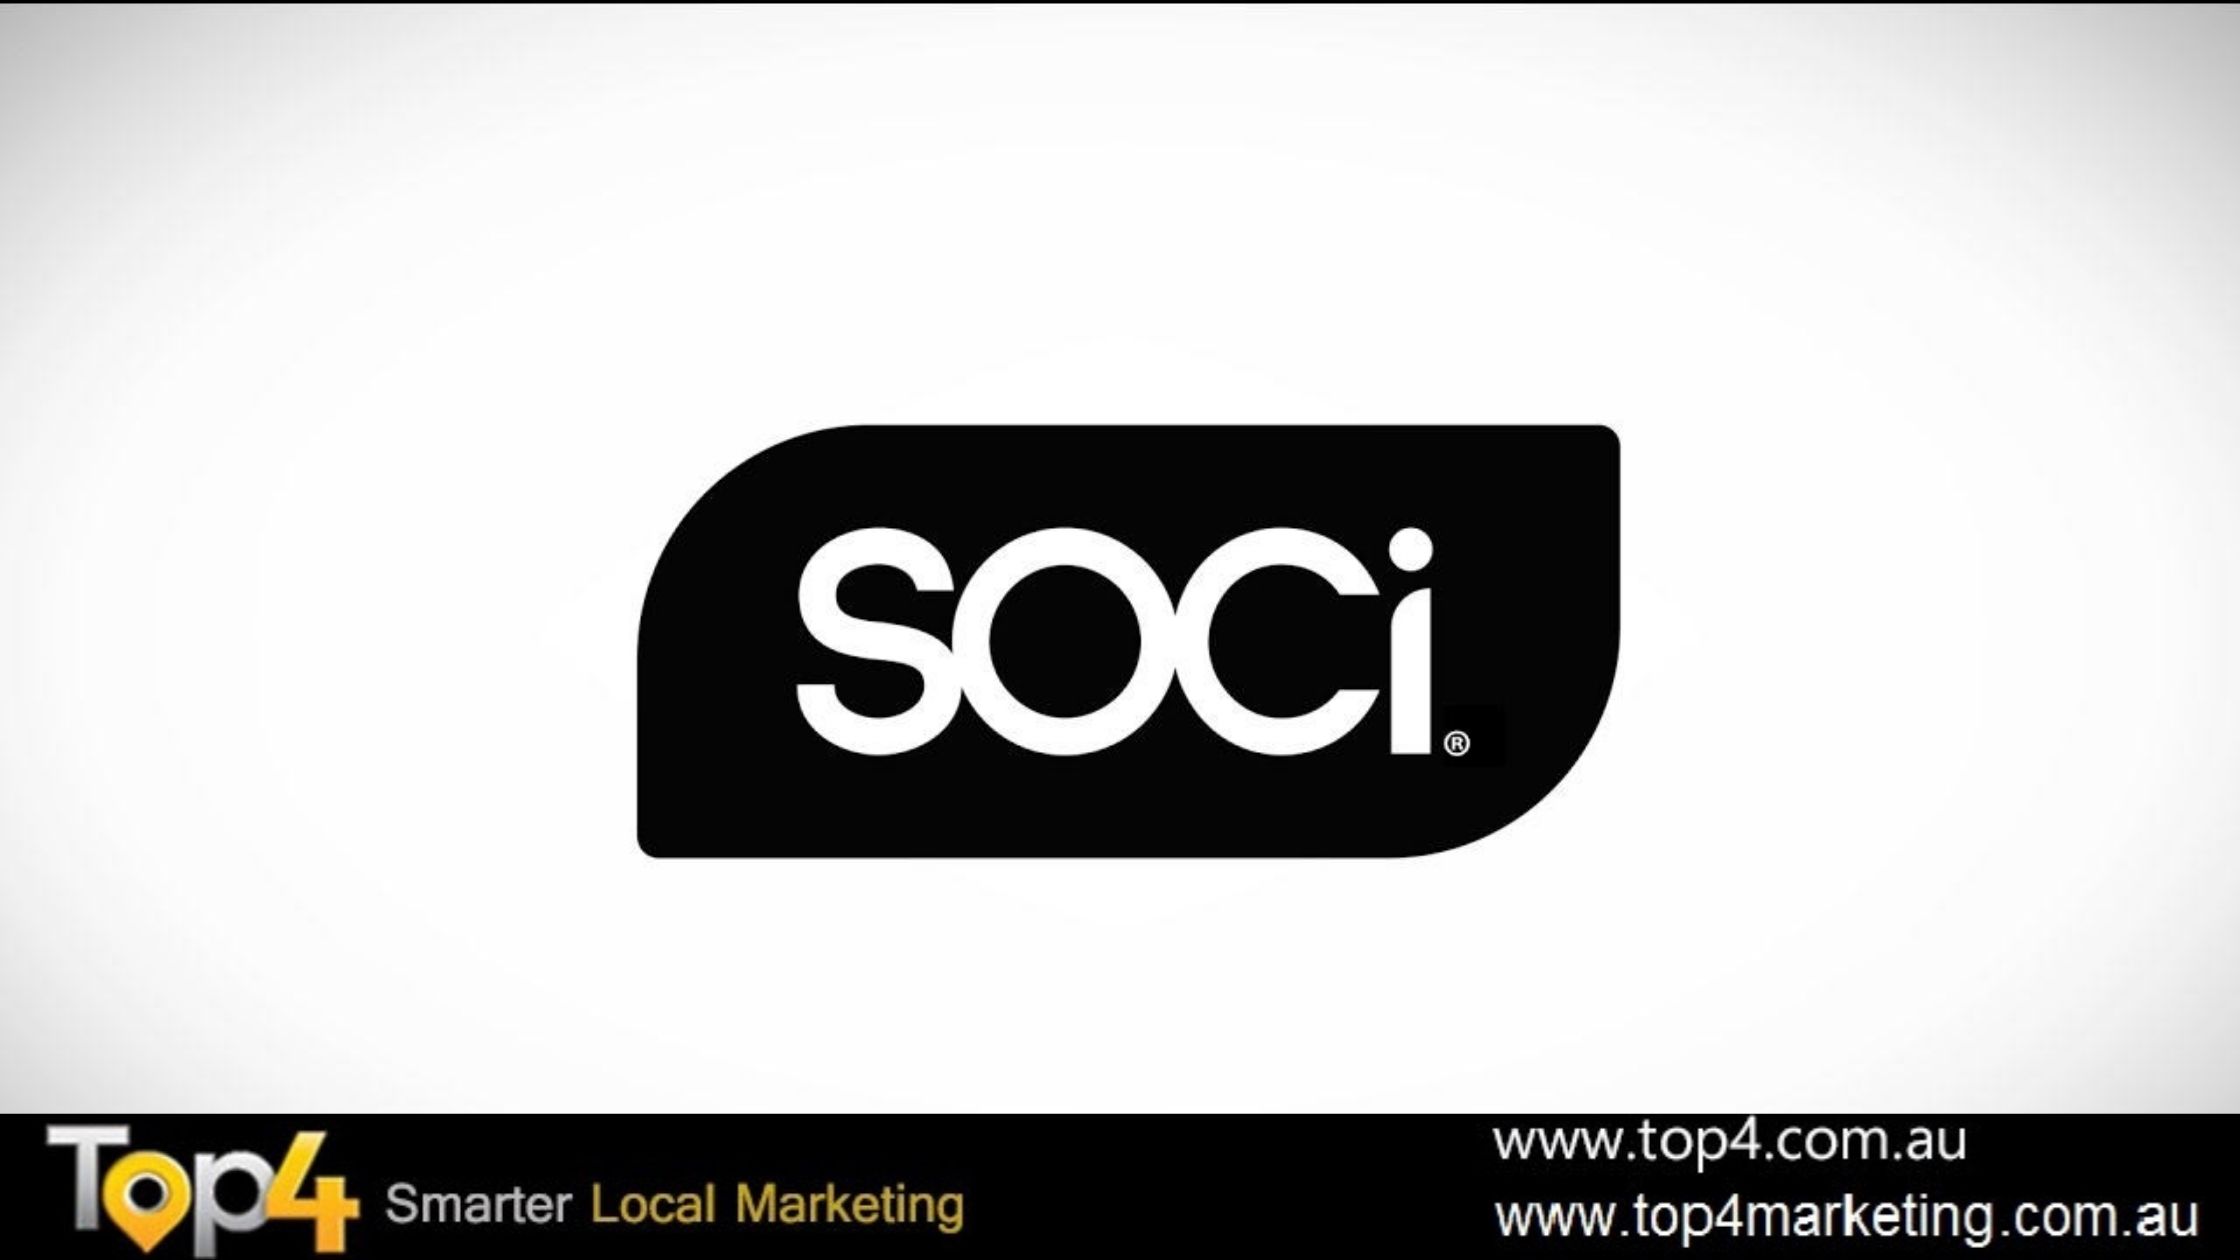 SOCi - Top4 Marketing